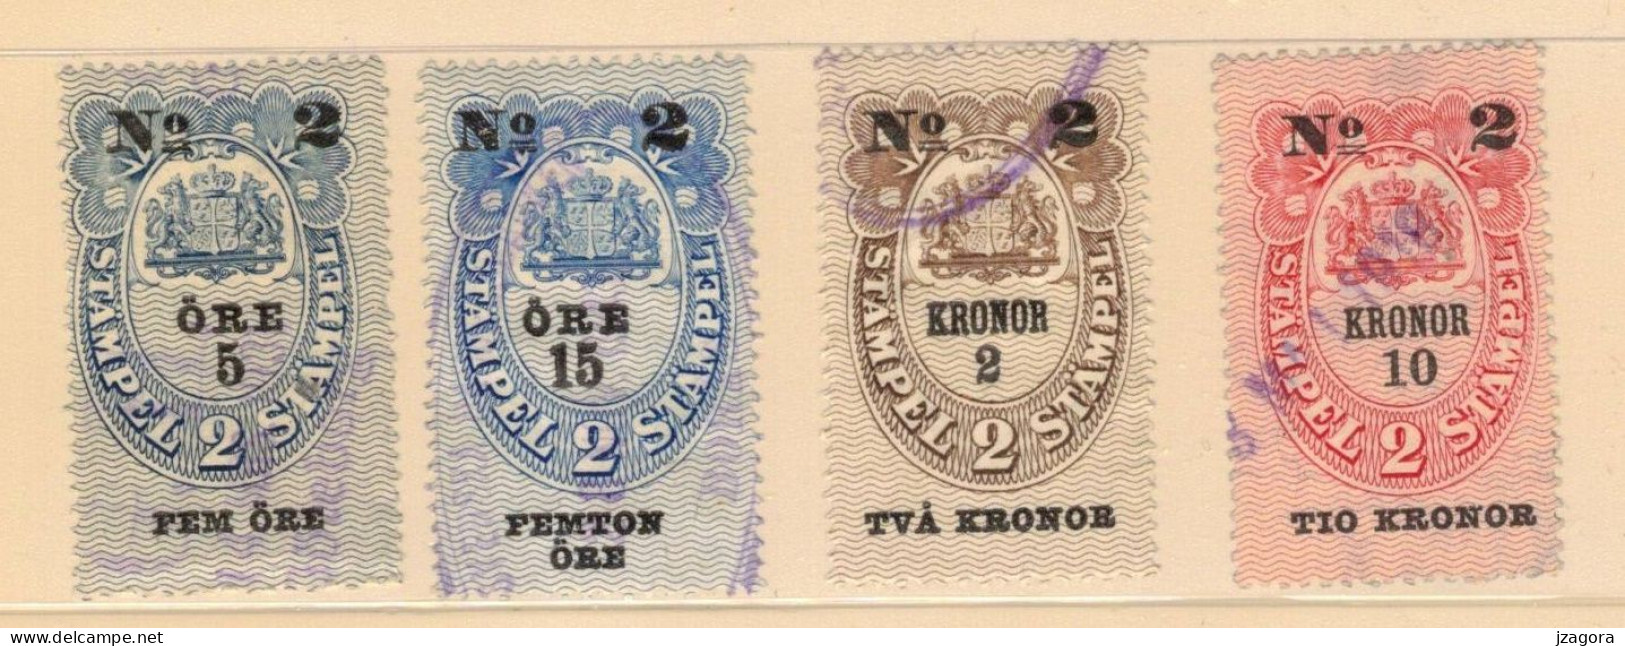 OLD ASSIGNMENT REVENUE STAMP STEUERMARKE TIMBRE FISCAL  SWEDEN SCHWEDEN SUEDE Early 1900-ties  - Stämpel2stämpel - Revenue Stamps